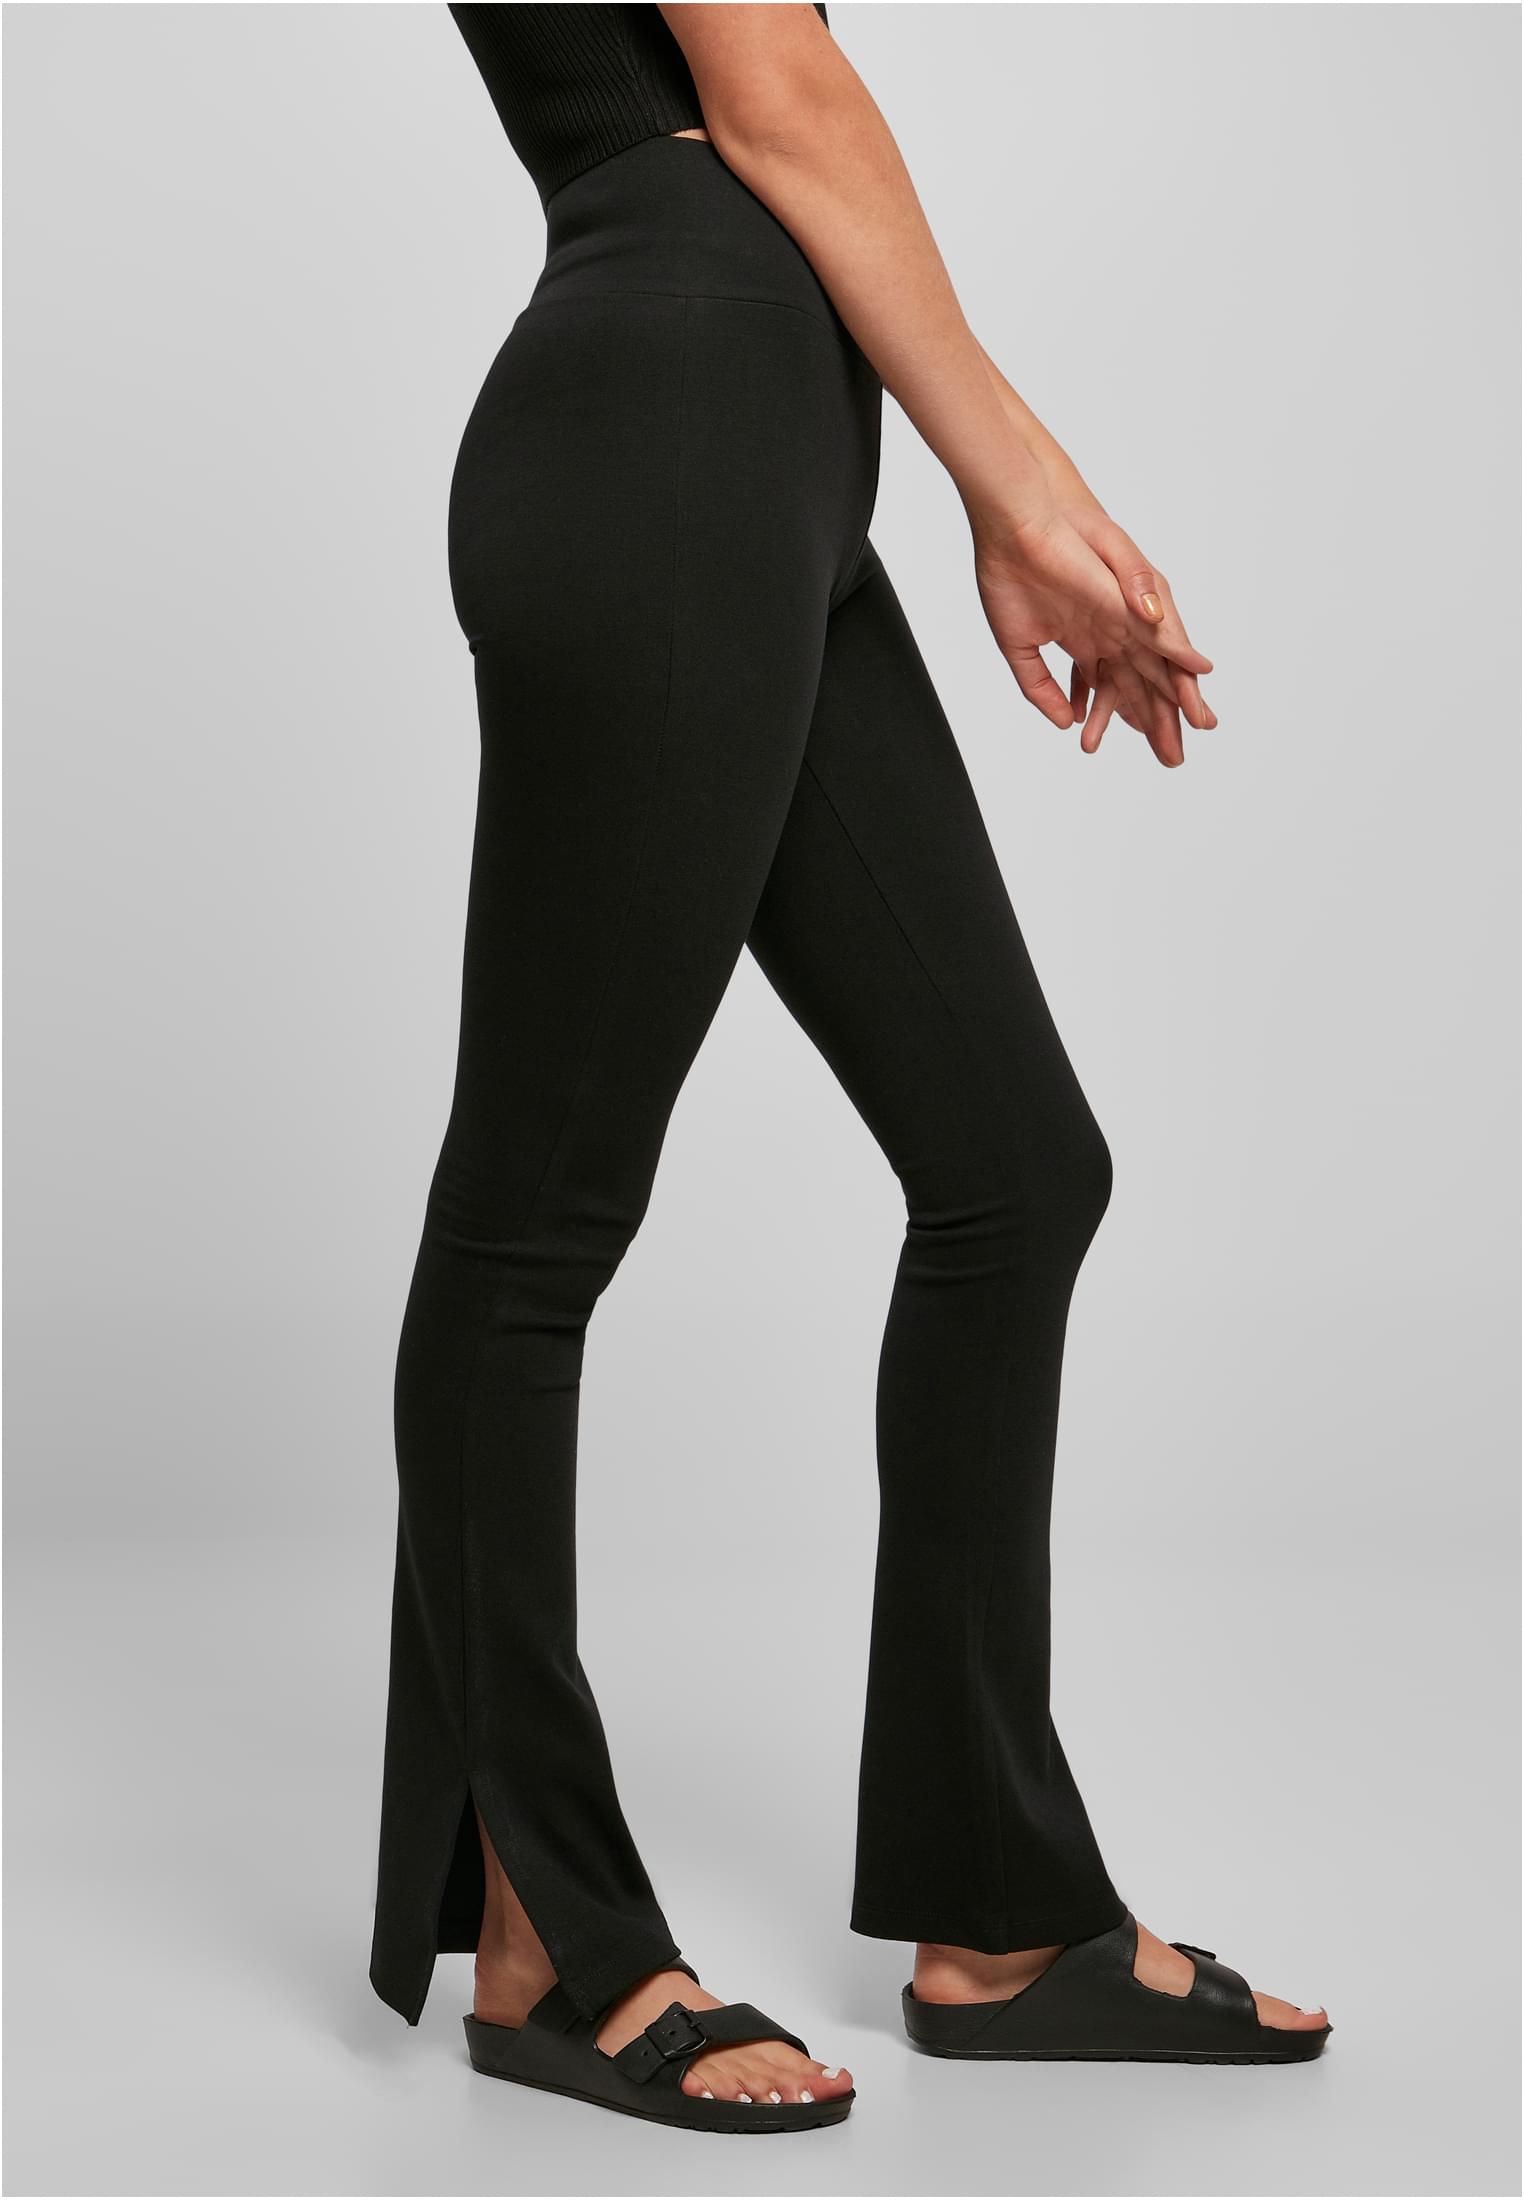 Leggings Ladies High Waist Side Slit Leggings in Farbe black